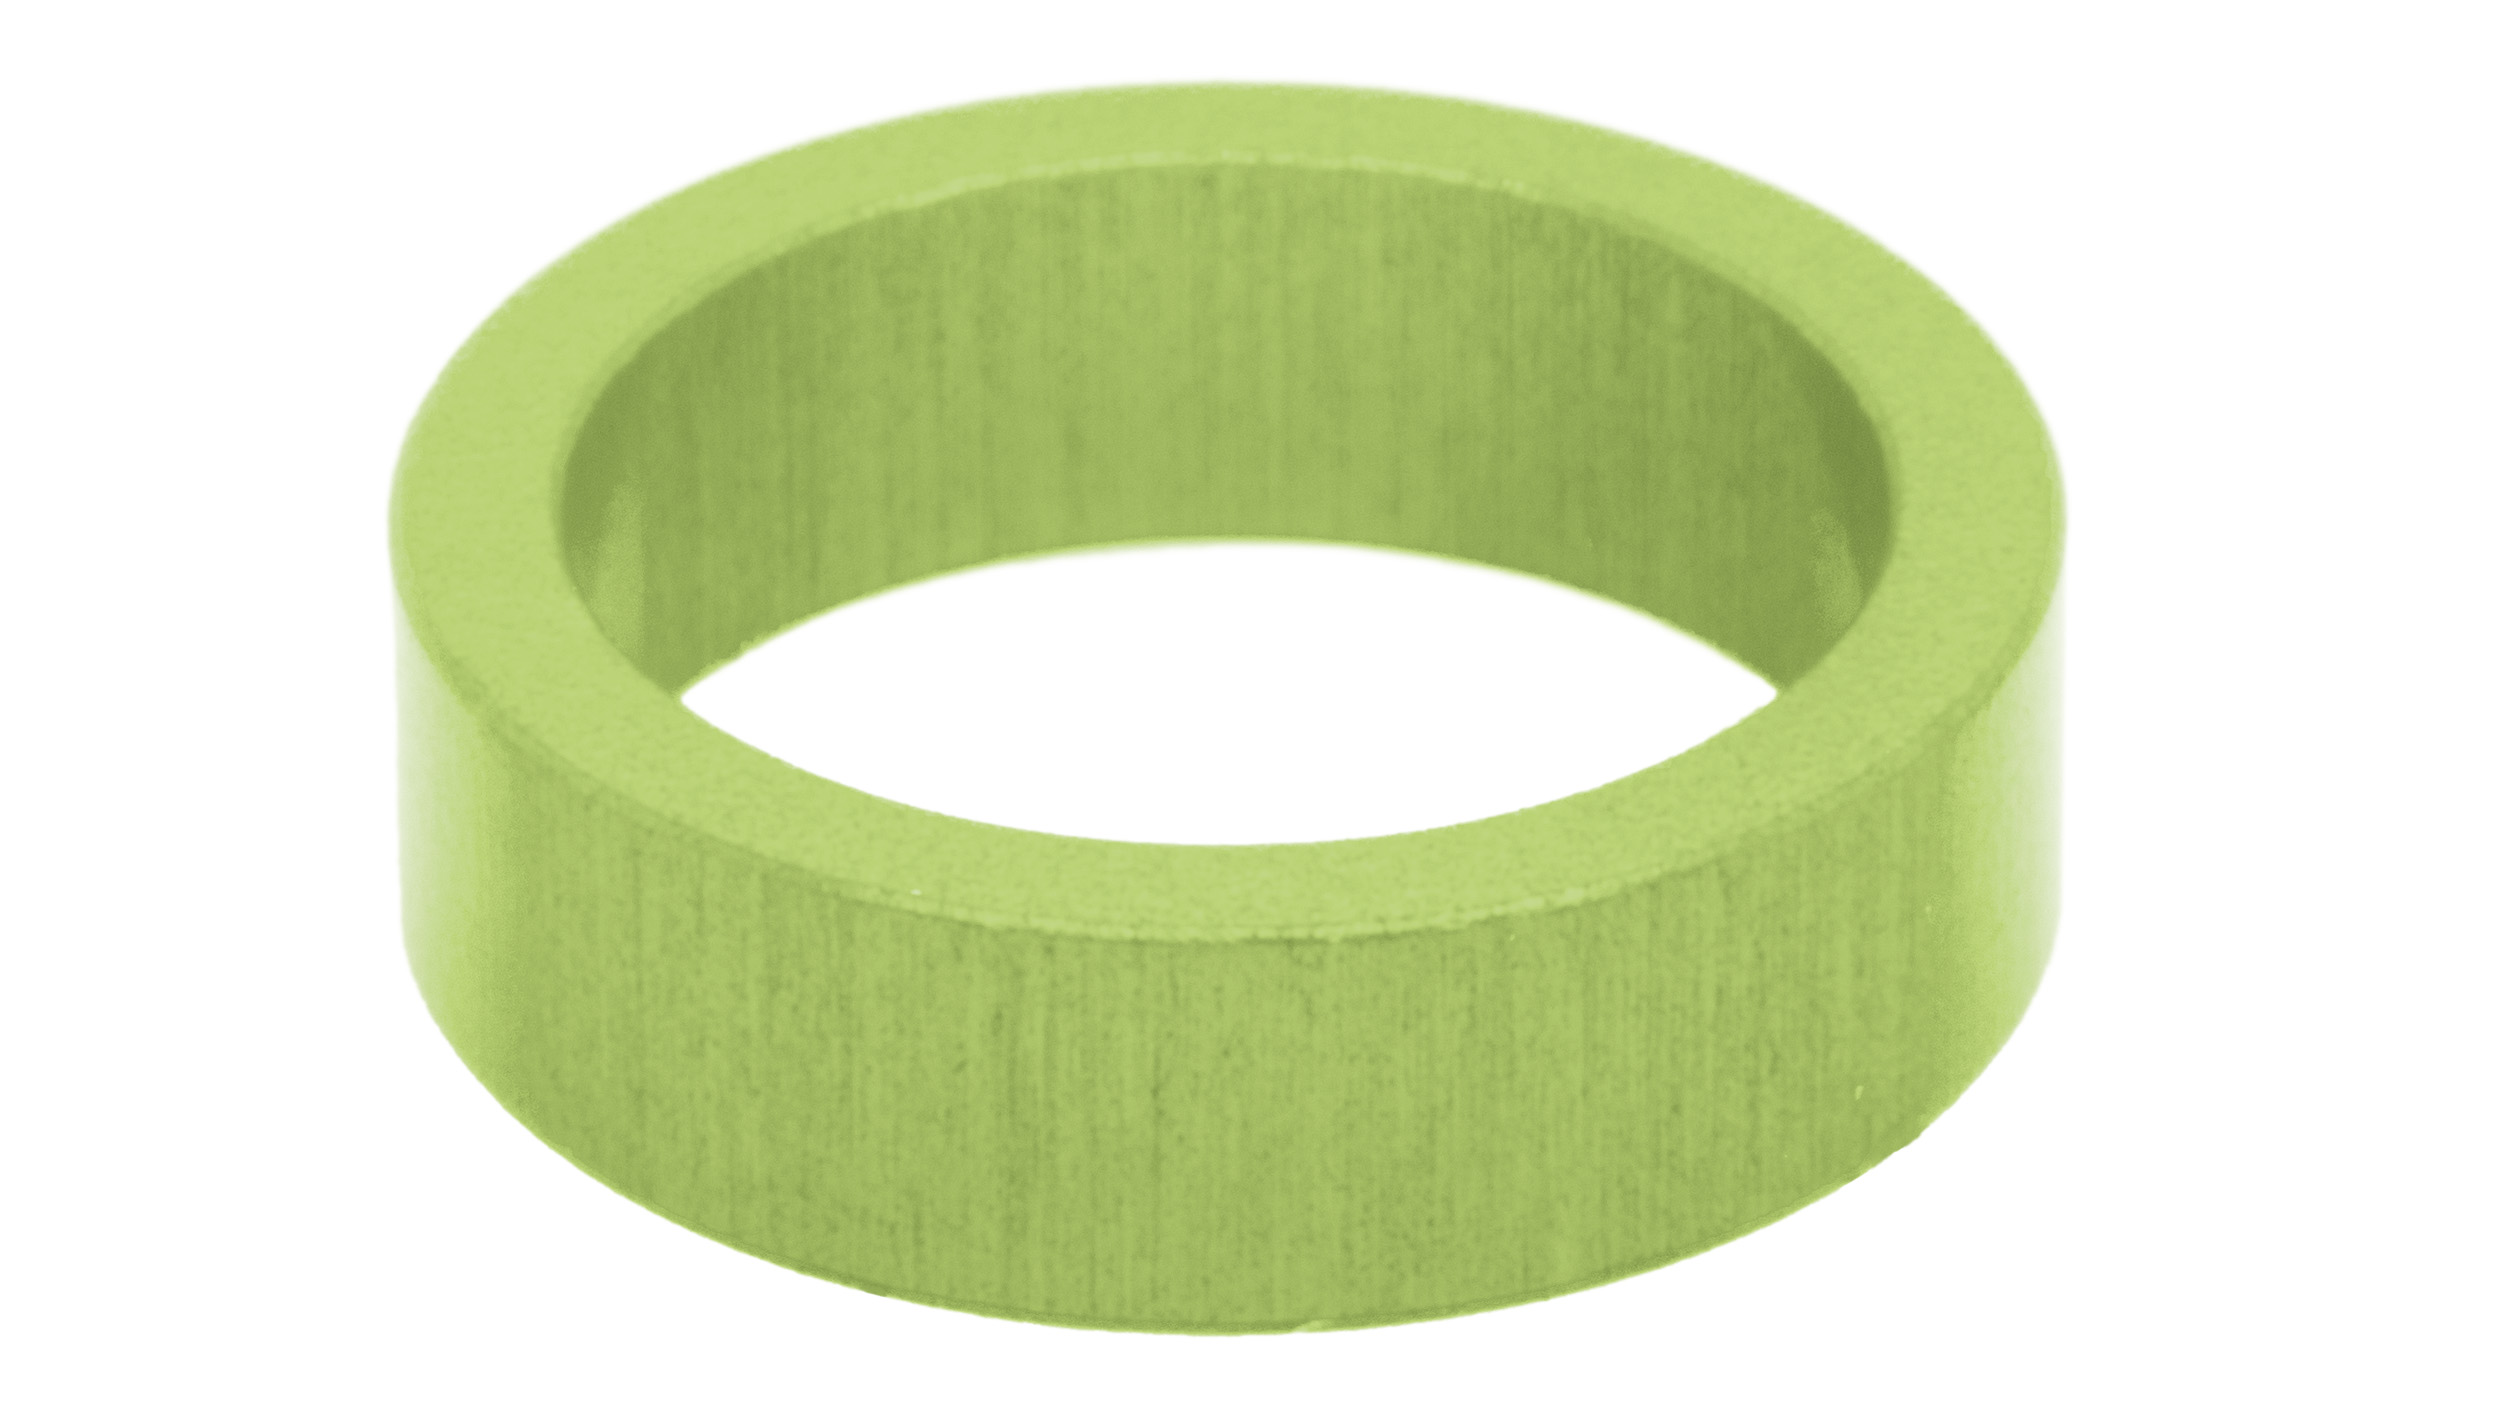 Identifikationsring, hellgrün, für Petitpierre TSE, Klinge 0,9 mm